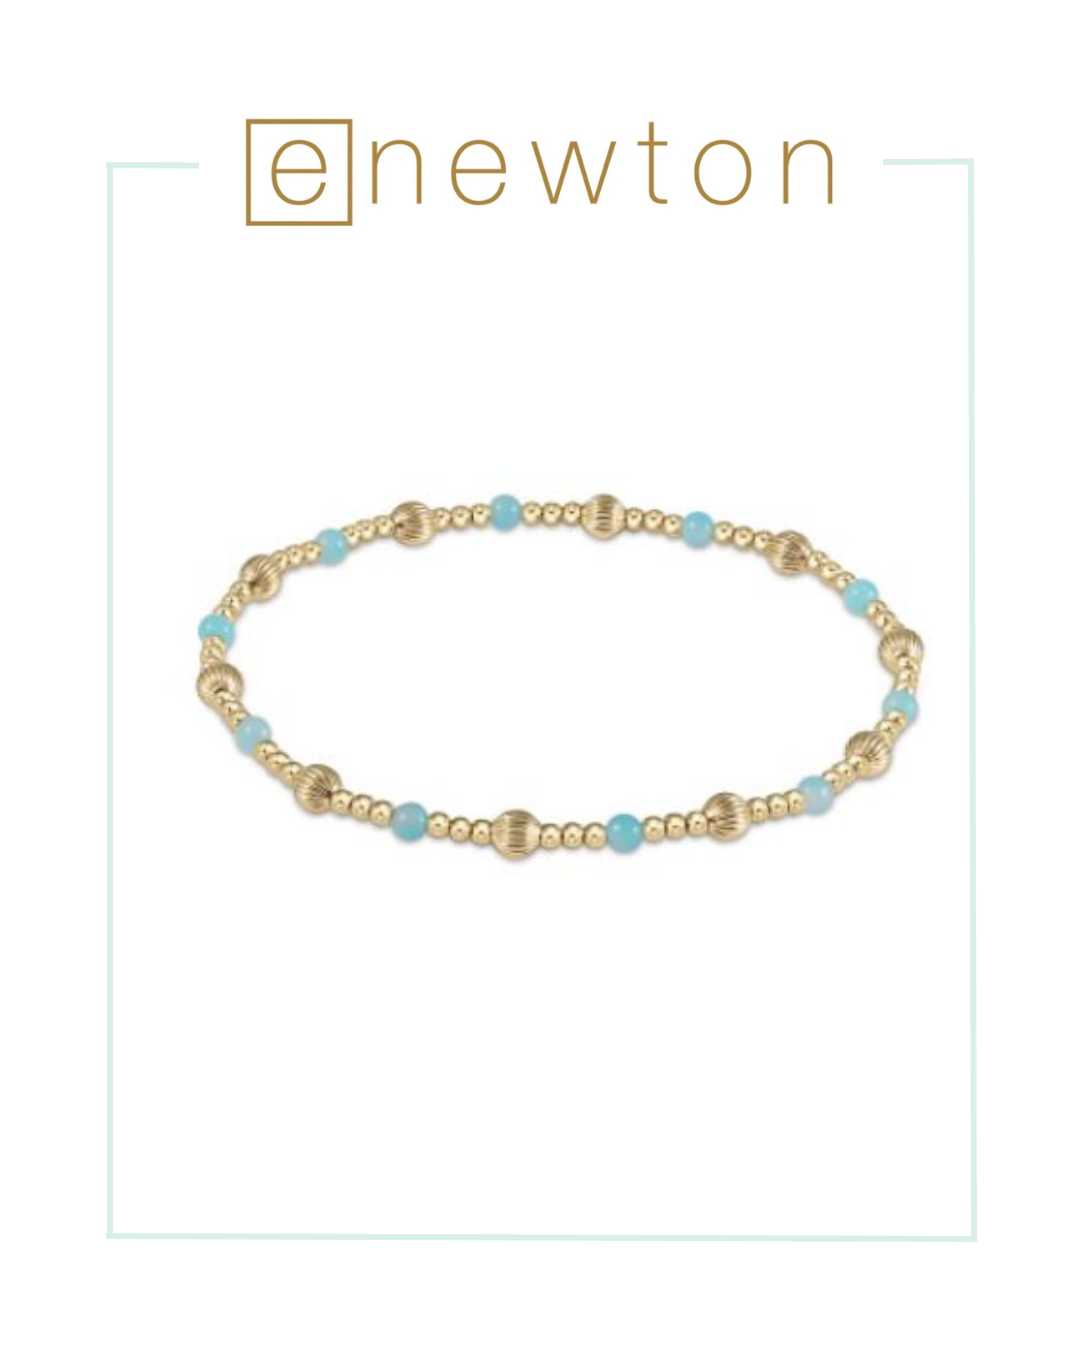 E Newton Dignity Sincerity Pattern 4mm Bead Bracelet - Amazonite-Bracelets-ENEWTON-The Village Shoppe, Women’s Fashion Boutique, Shop Online and In Store - Located in Muscle Shoals, AL.